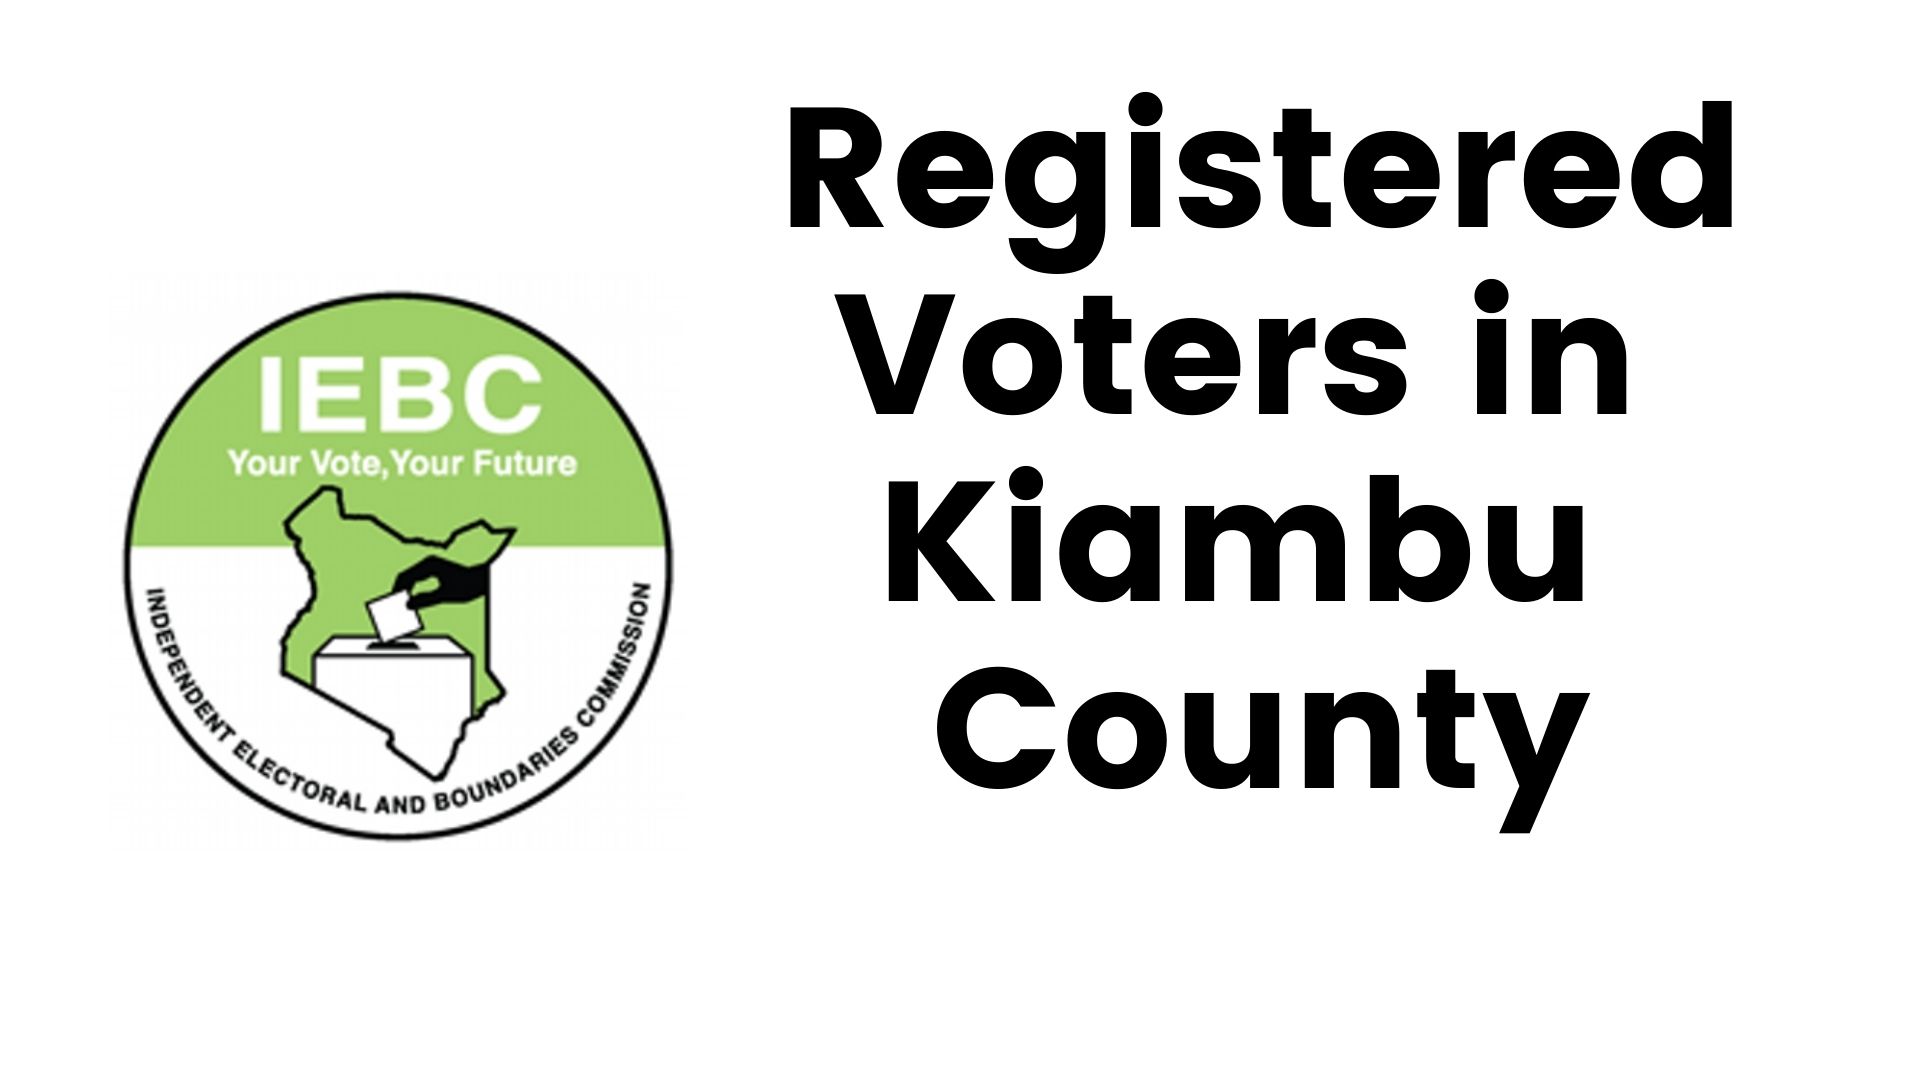 IEBC Kiambu County Registered Voters (Constituency, Wards)